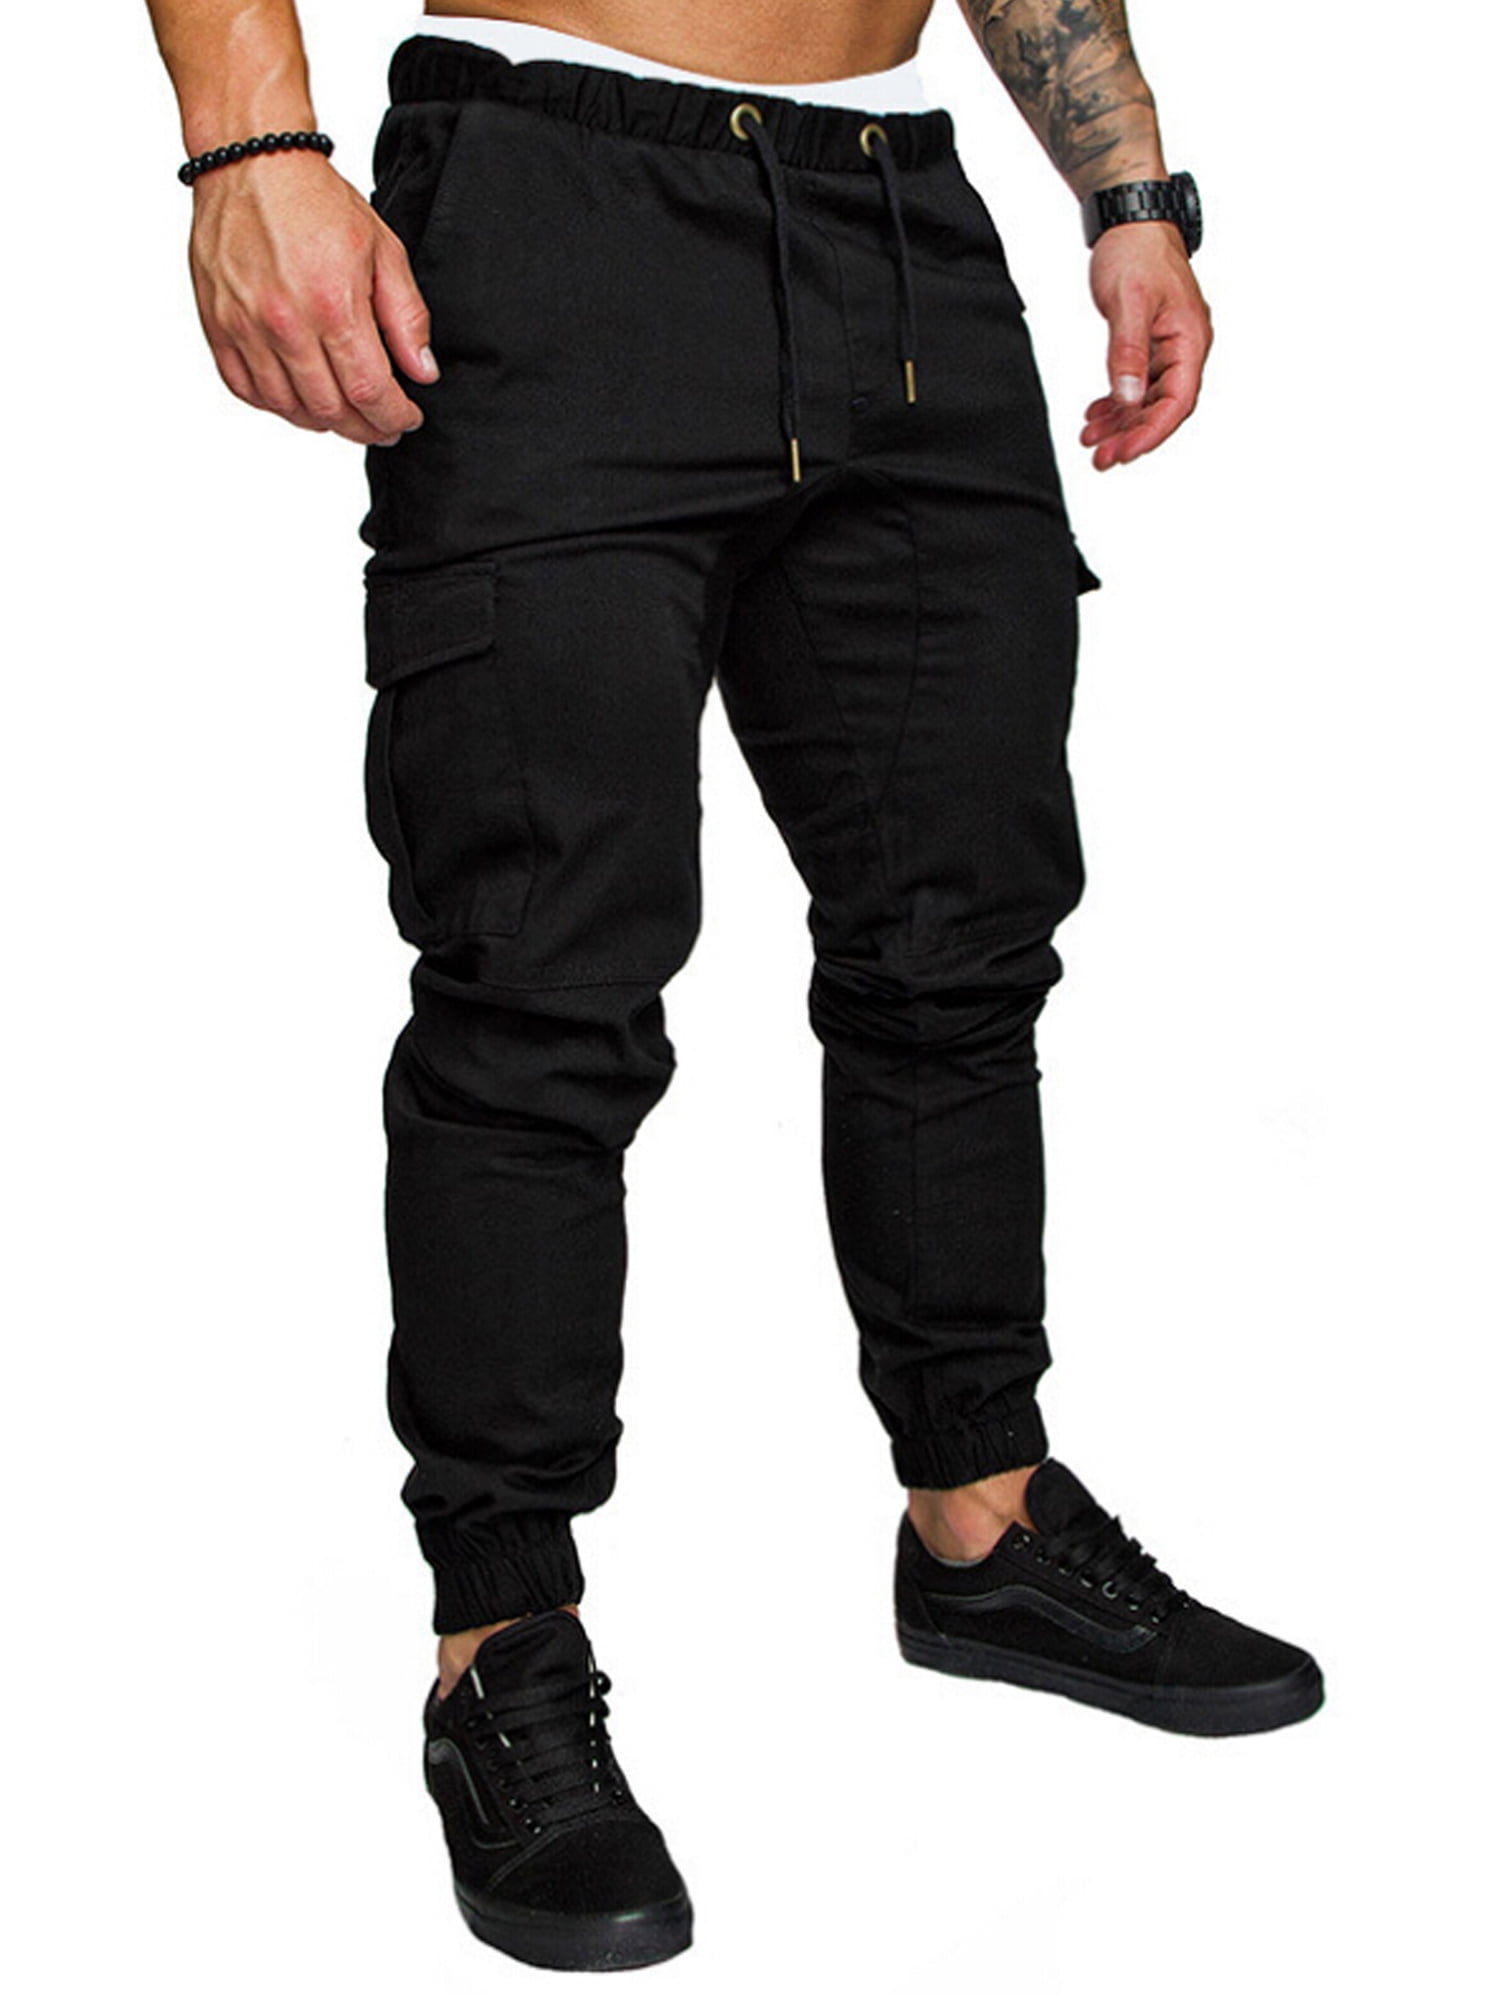 Jogger Slim Pencil Casual Trousers Pants Fit Straight Cargo Leg Urban Men's New 